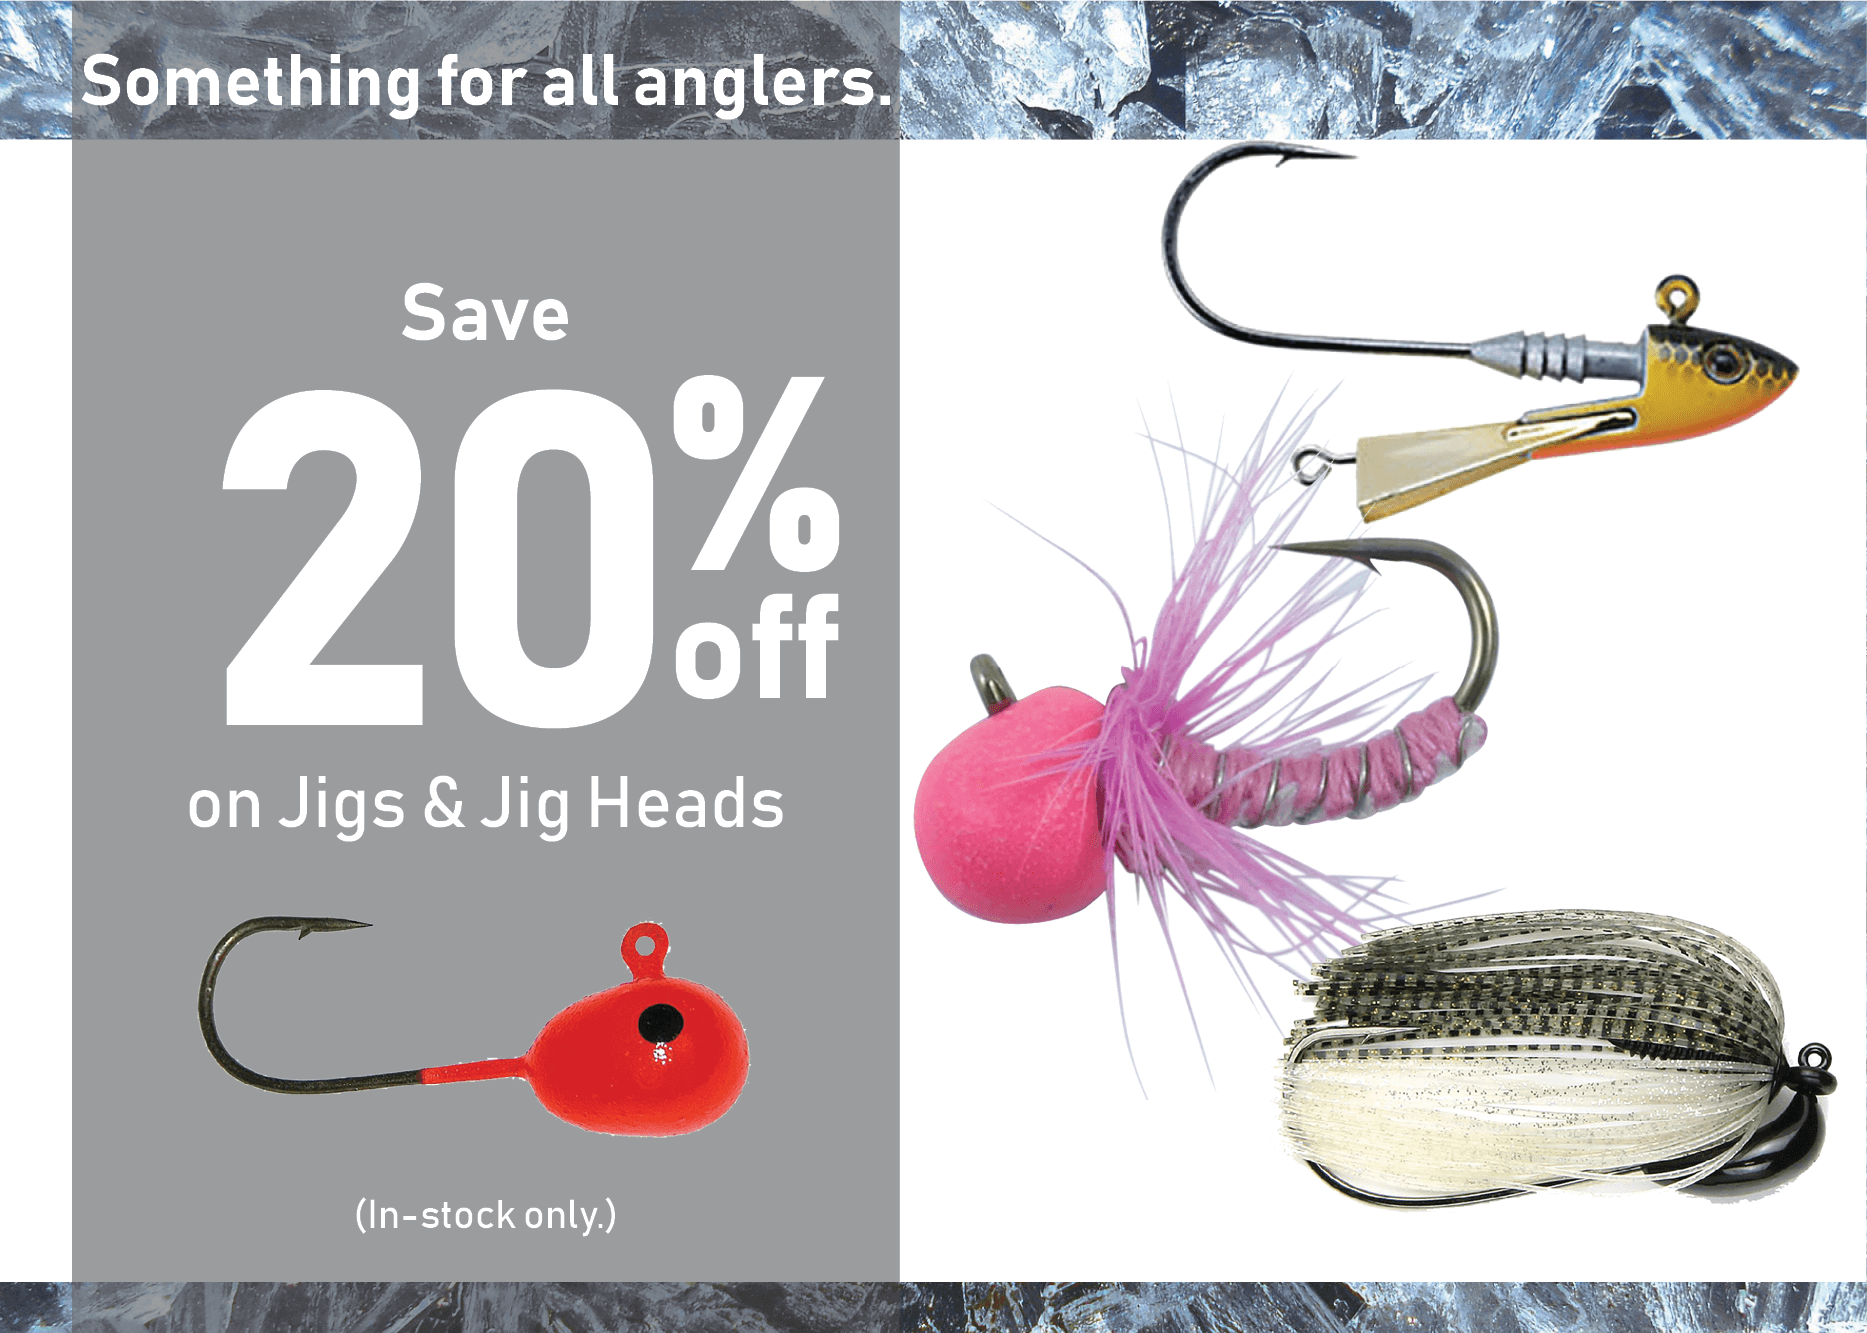 Save 20% on all Jigs & Jig Heads